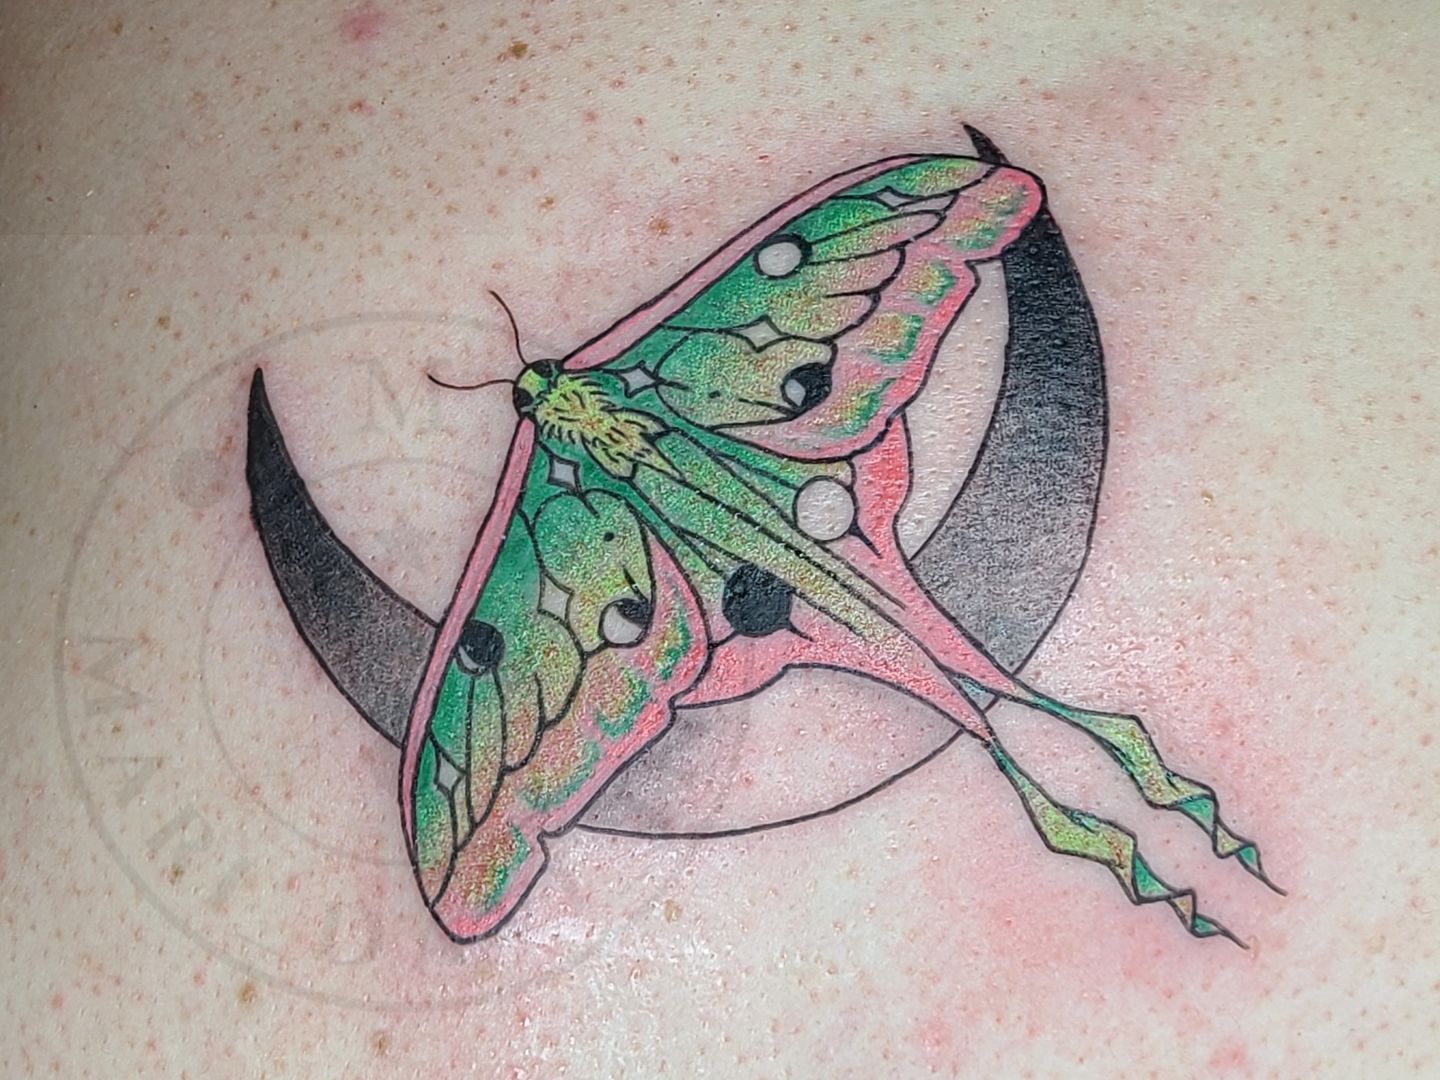 Buy Moon Moth Tattoo Design Stencil Online in India  Etsy